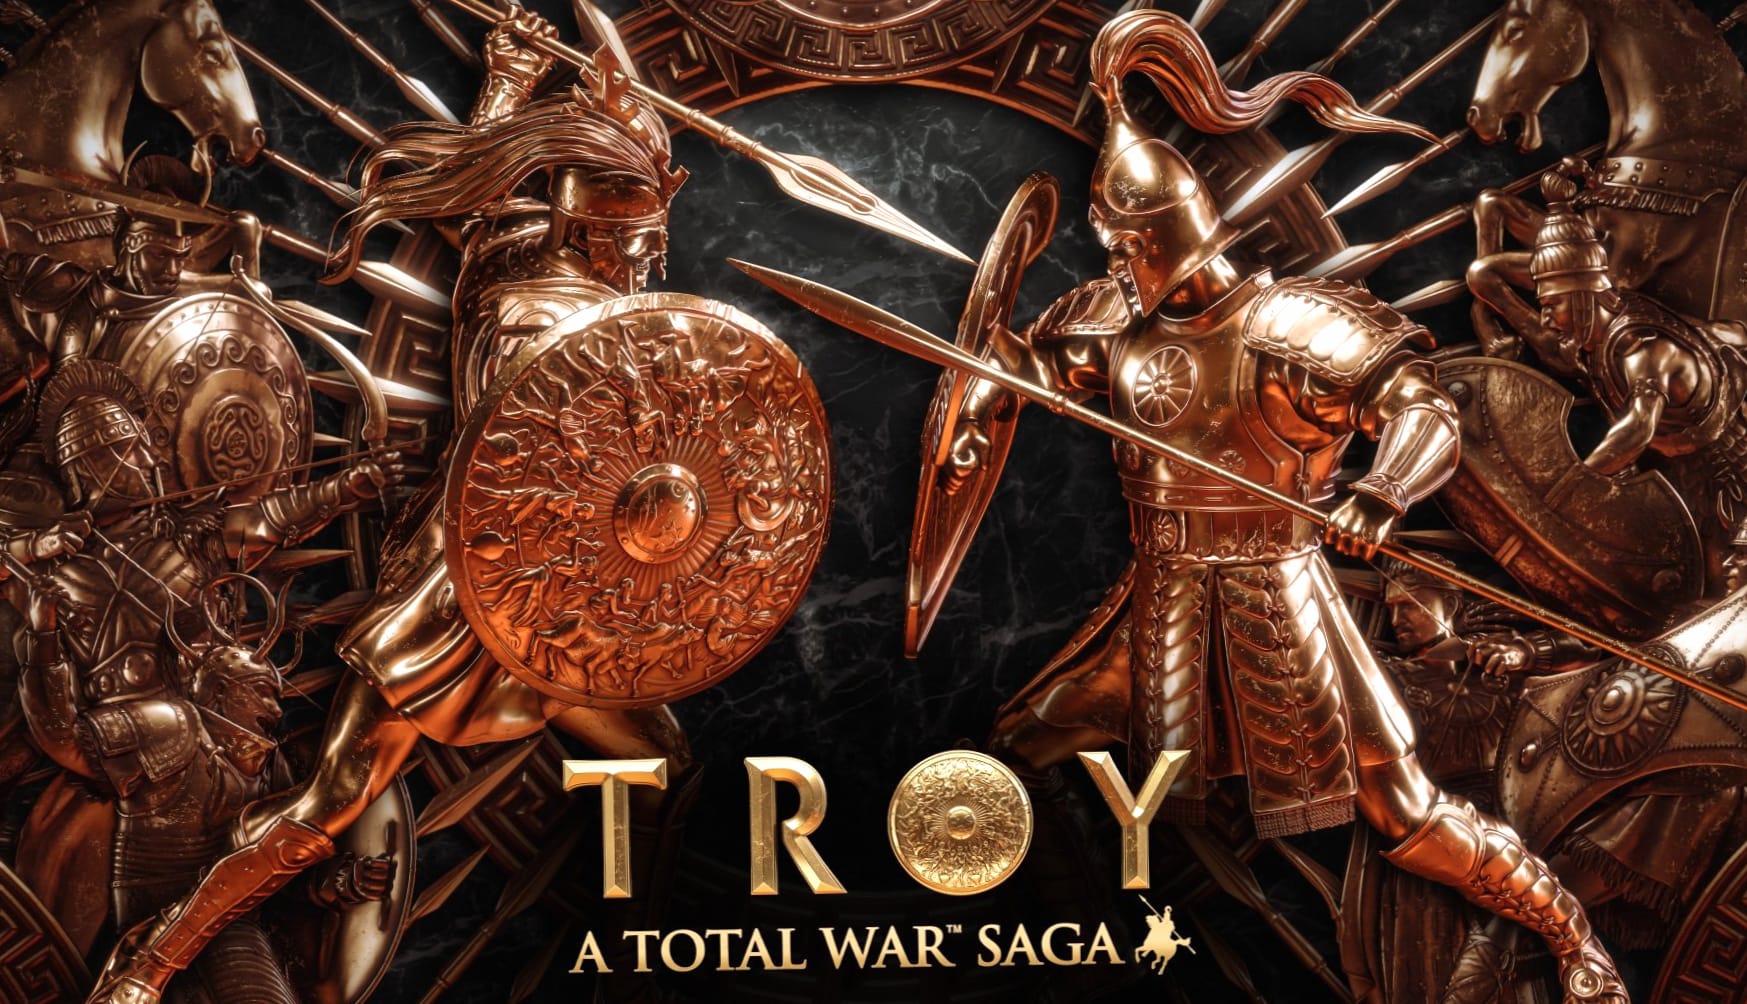 A Total War Saga TROY wallpapers HD quality